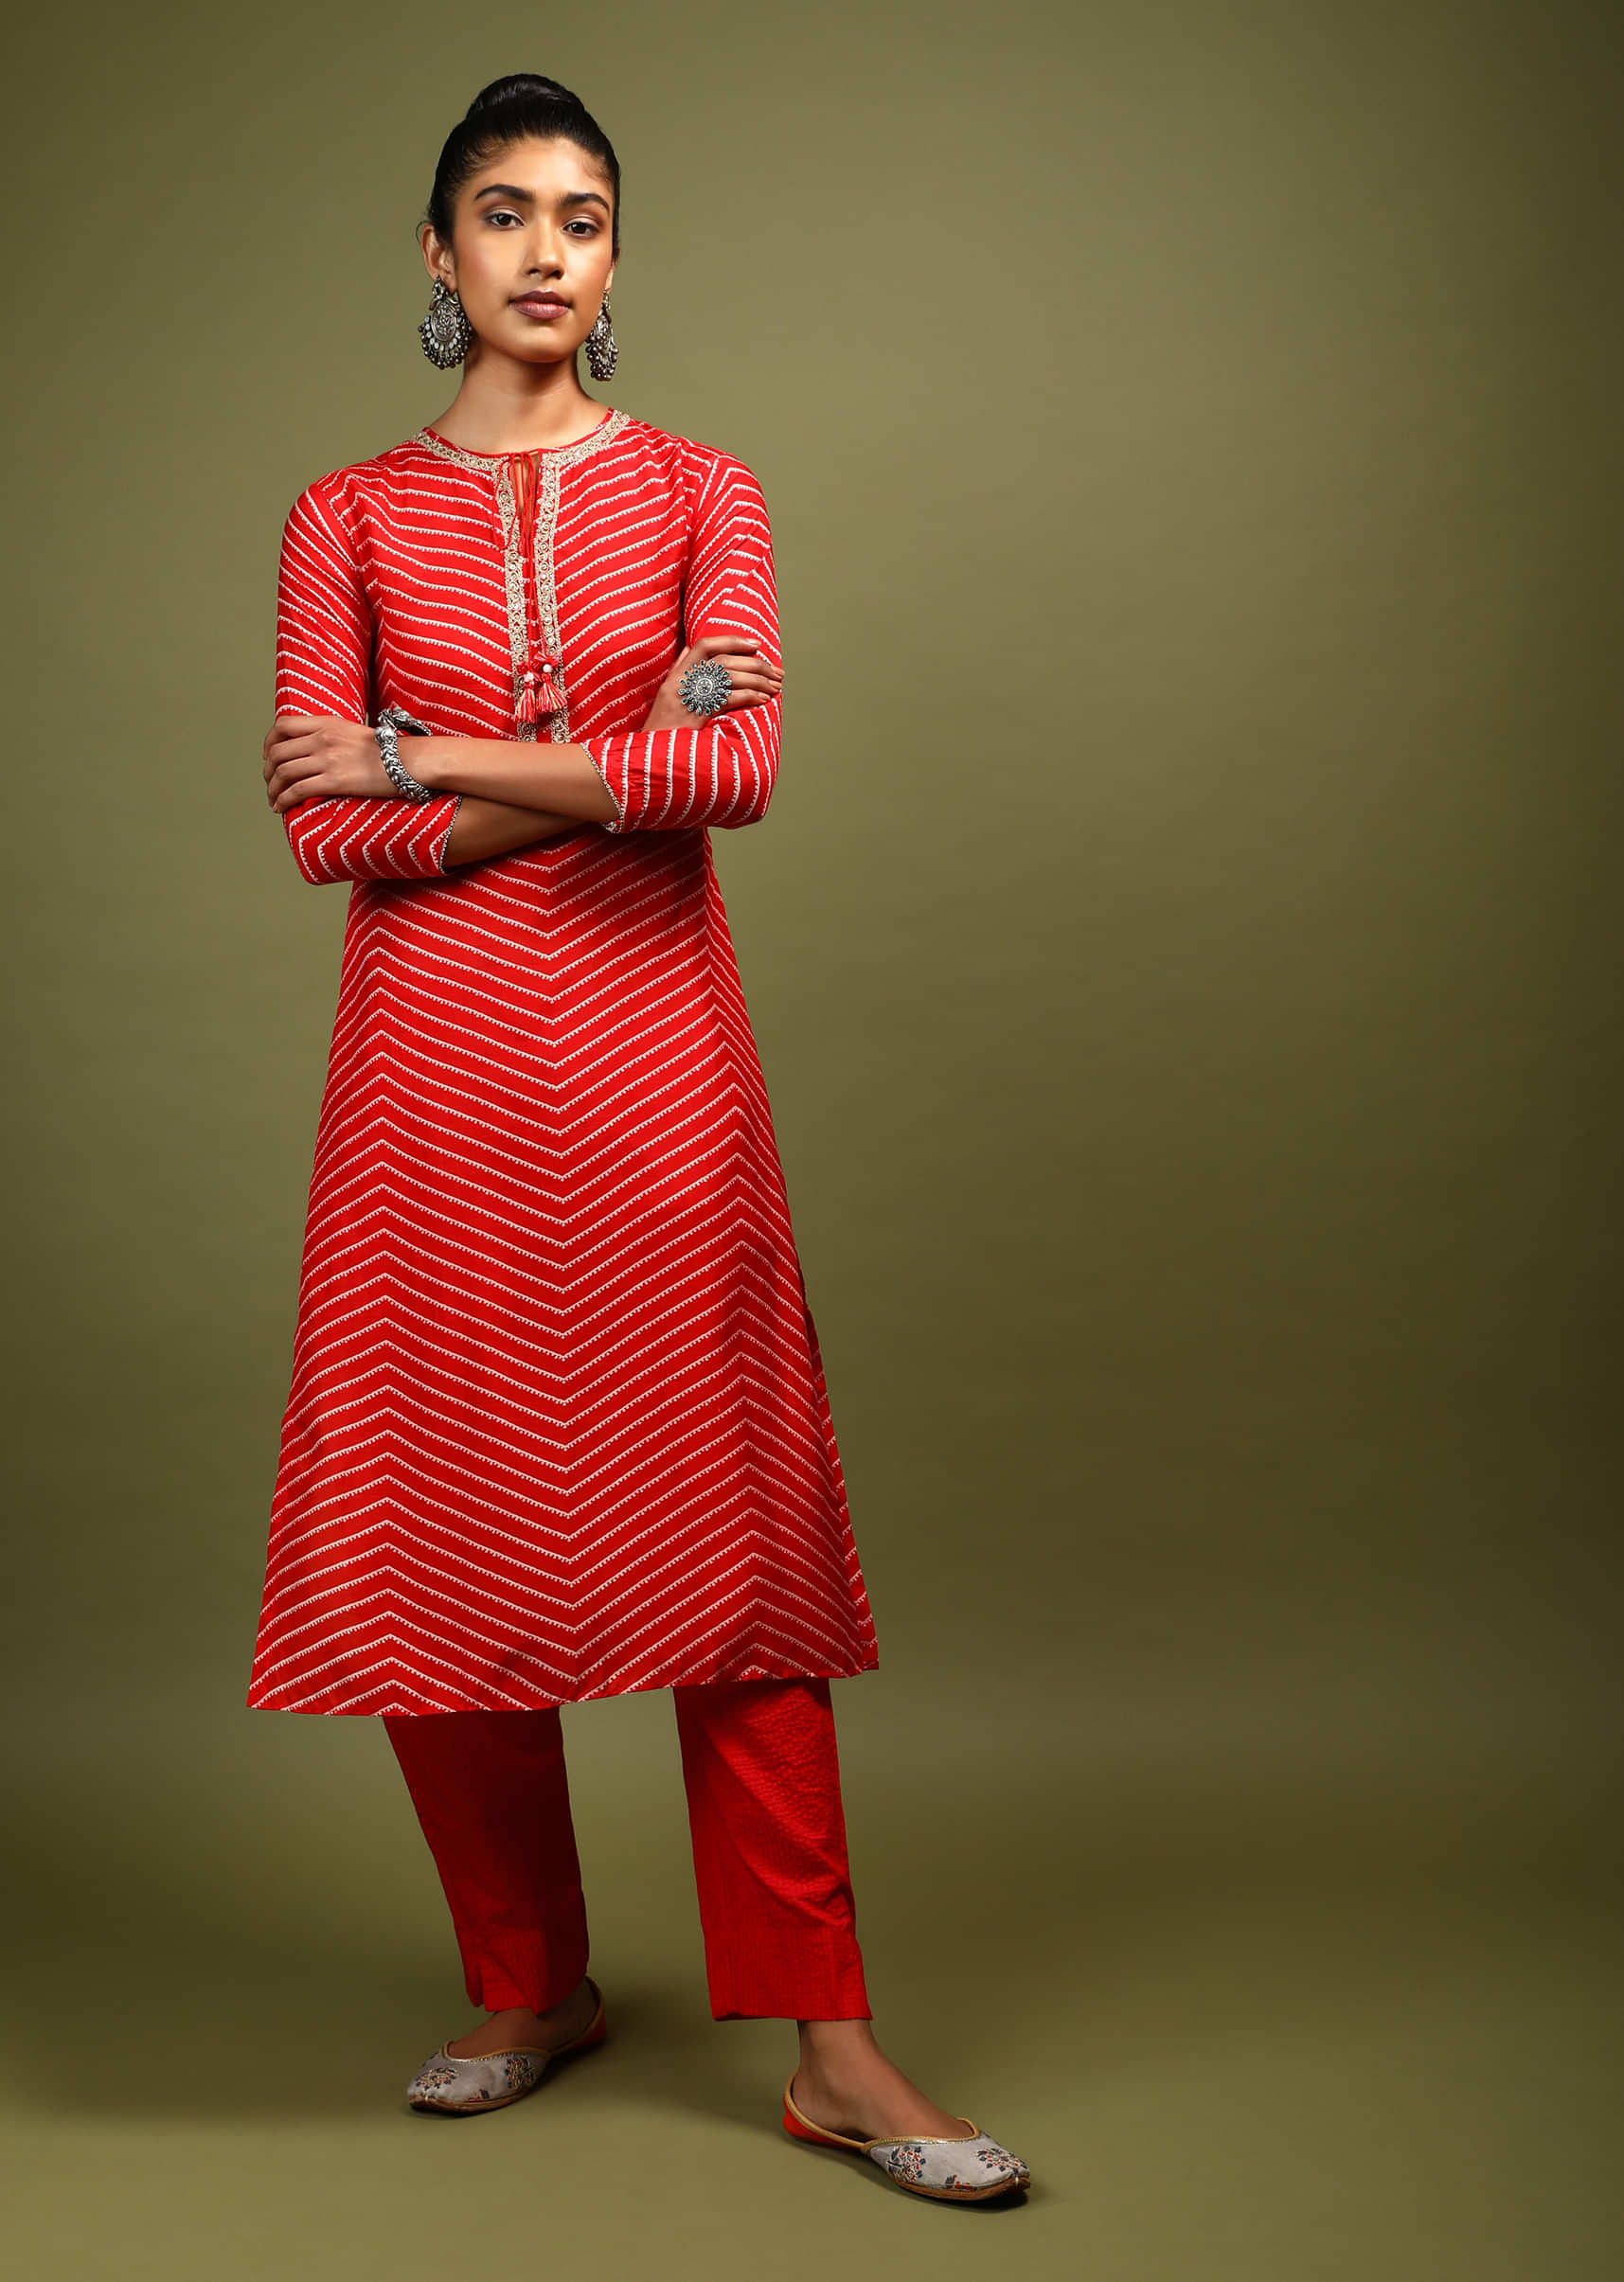 Red Kurta In Cotton With Batik Printed Chevron Design And Zari Work On The Neckline 